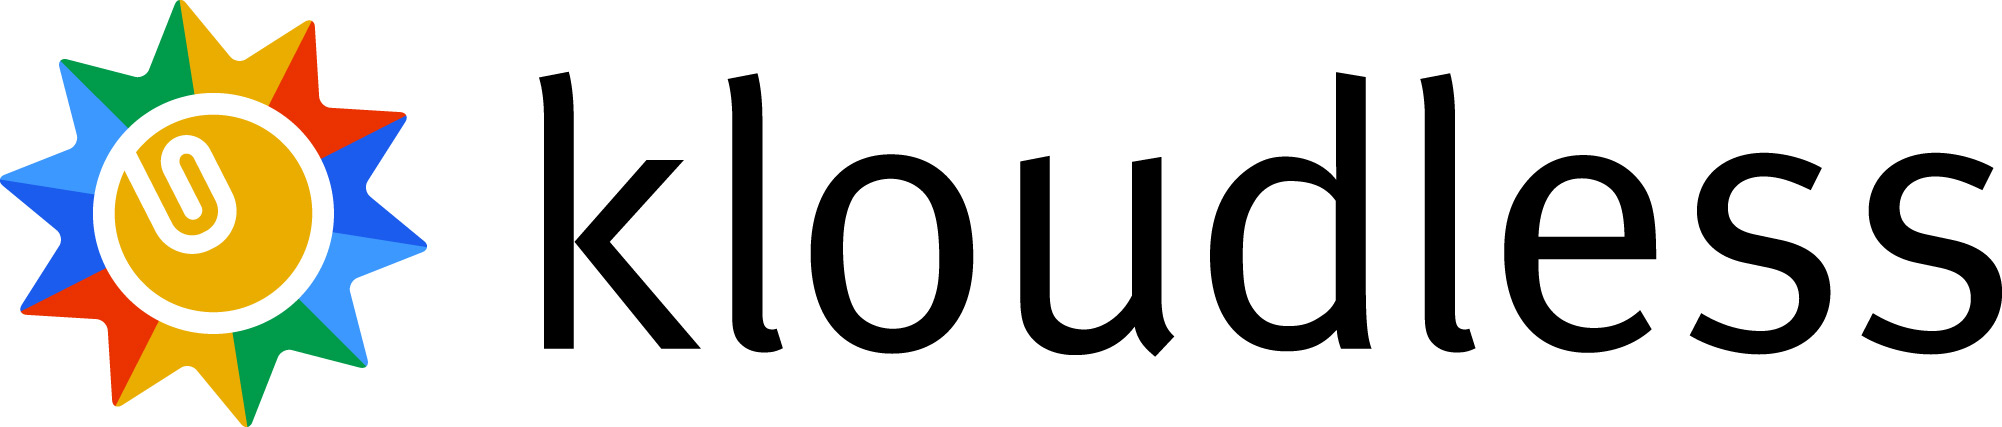 Kloudless Logo